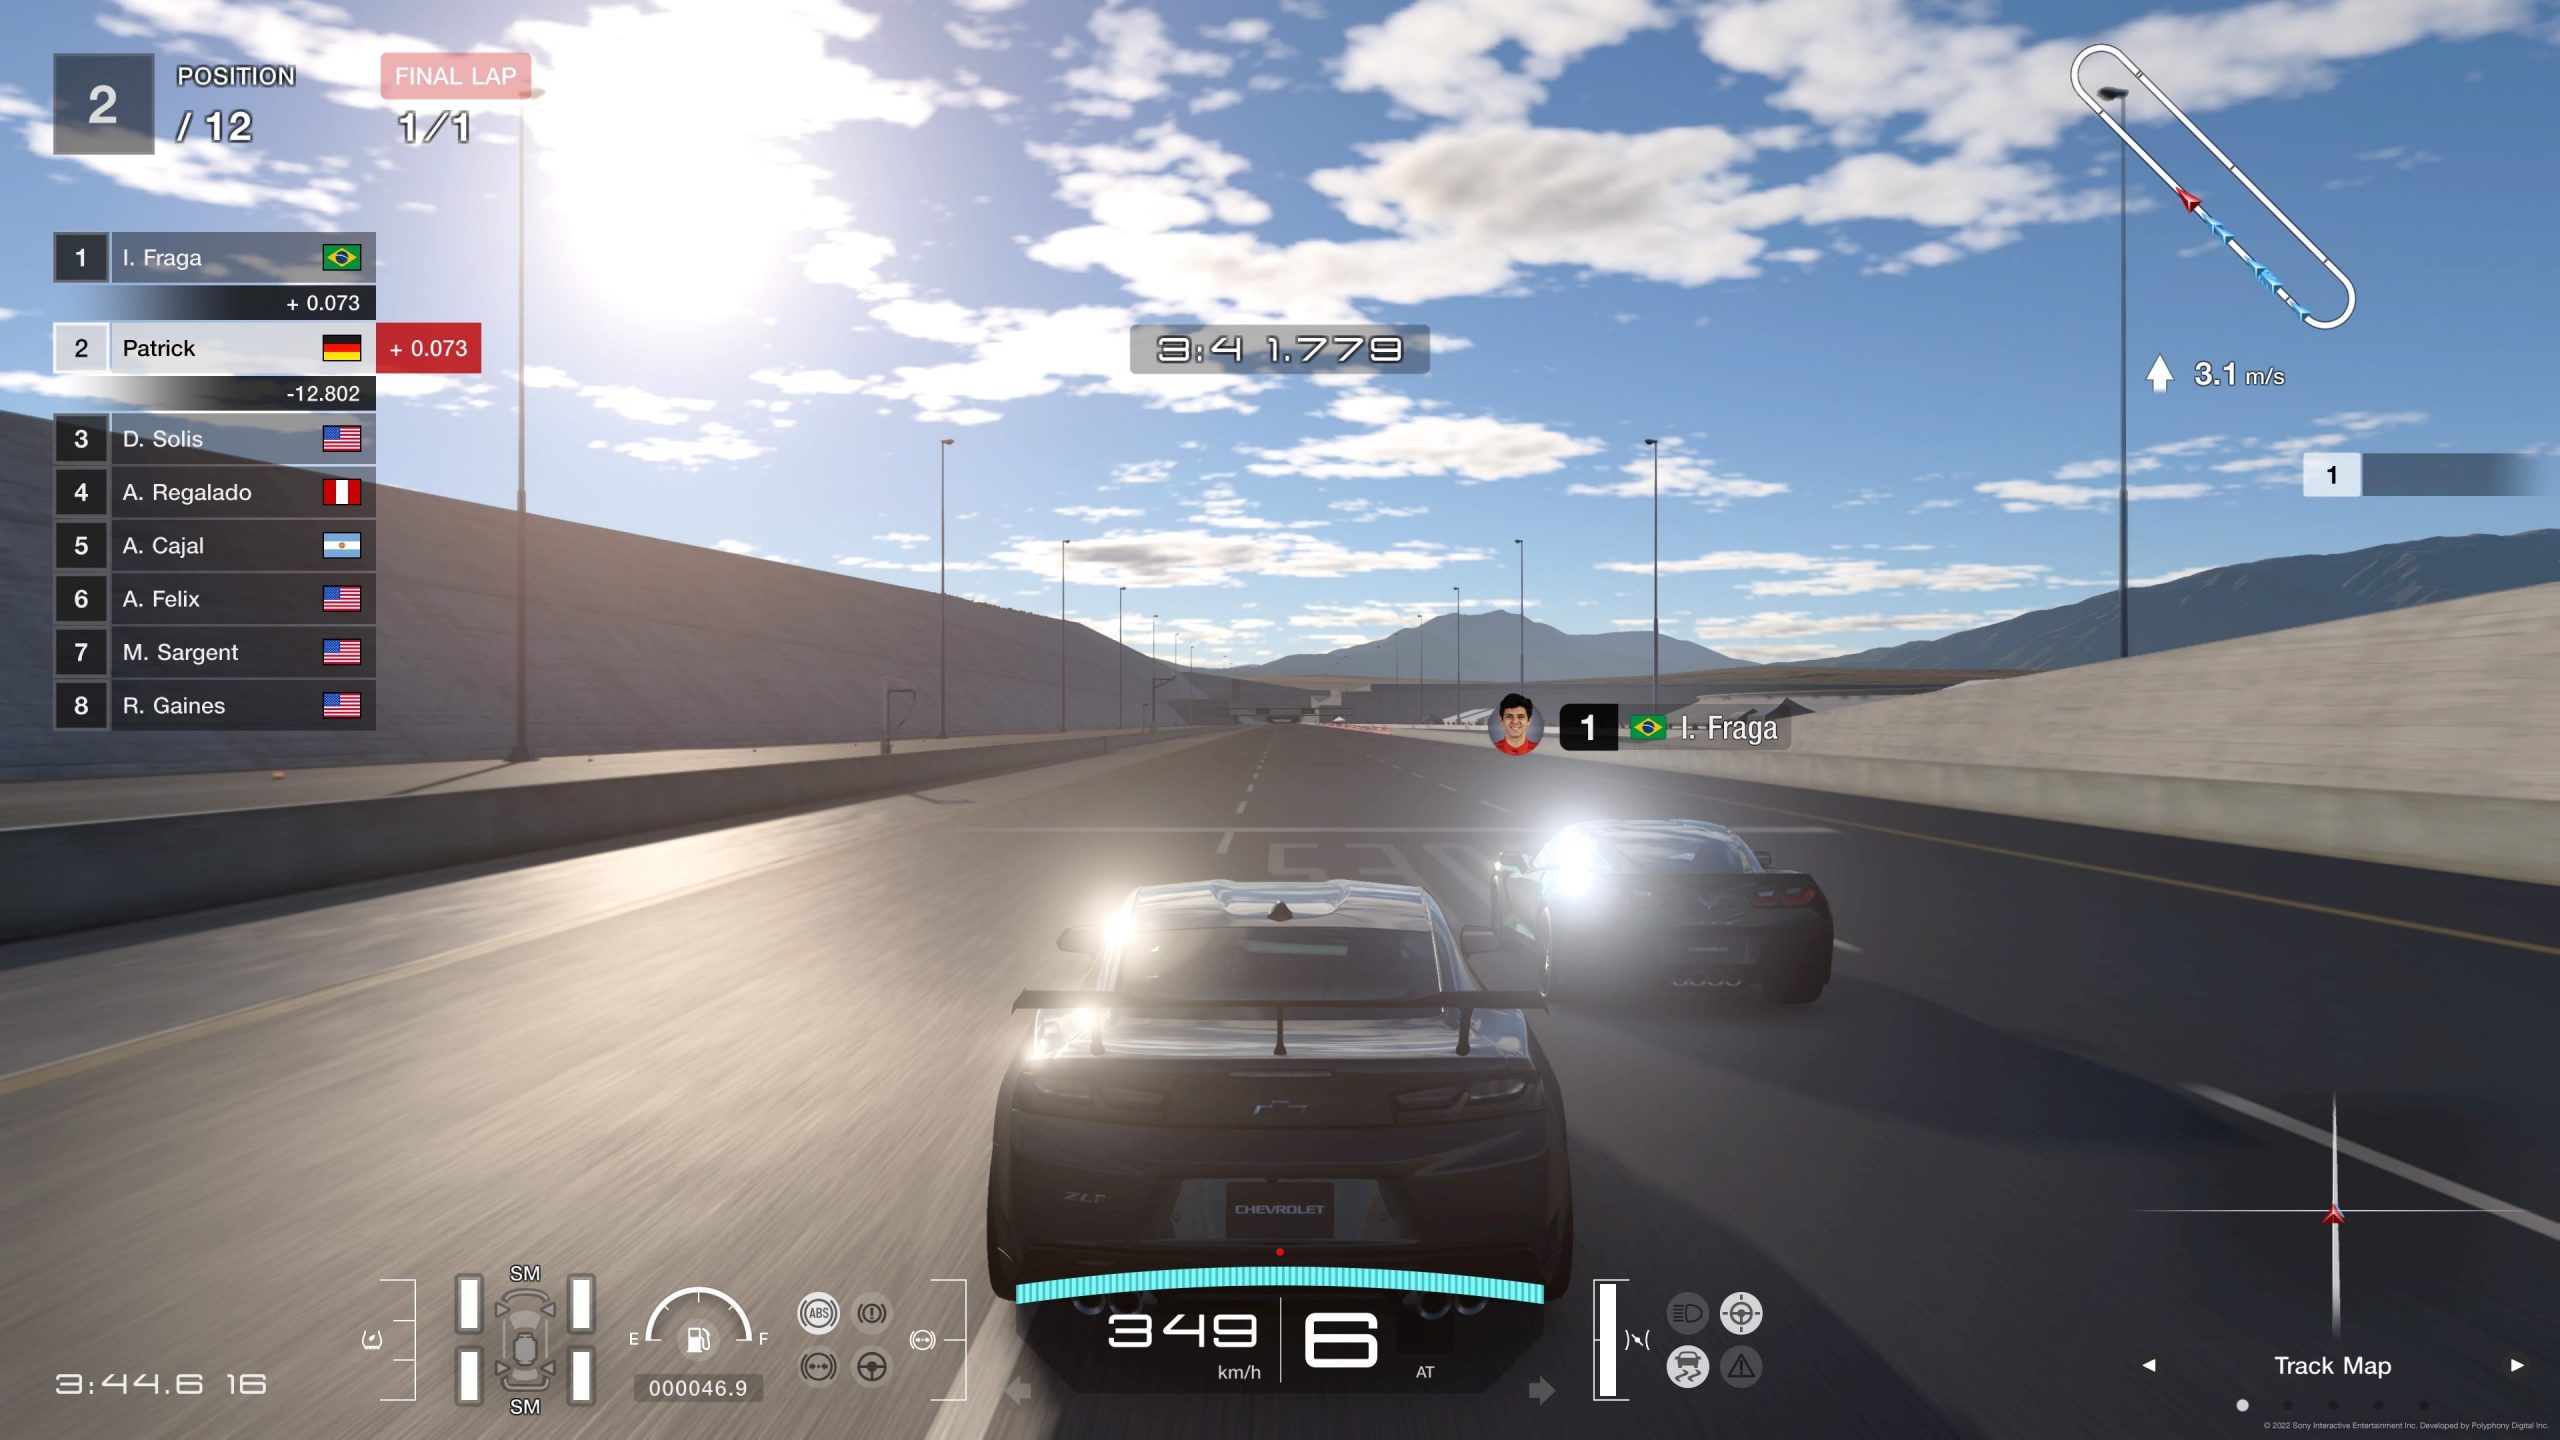 Enjoy This Stunning 4K Unedited Gran Turismo 7 Gameplay Video